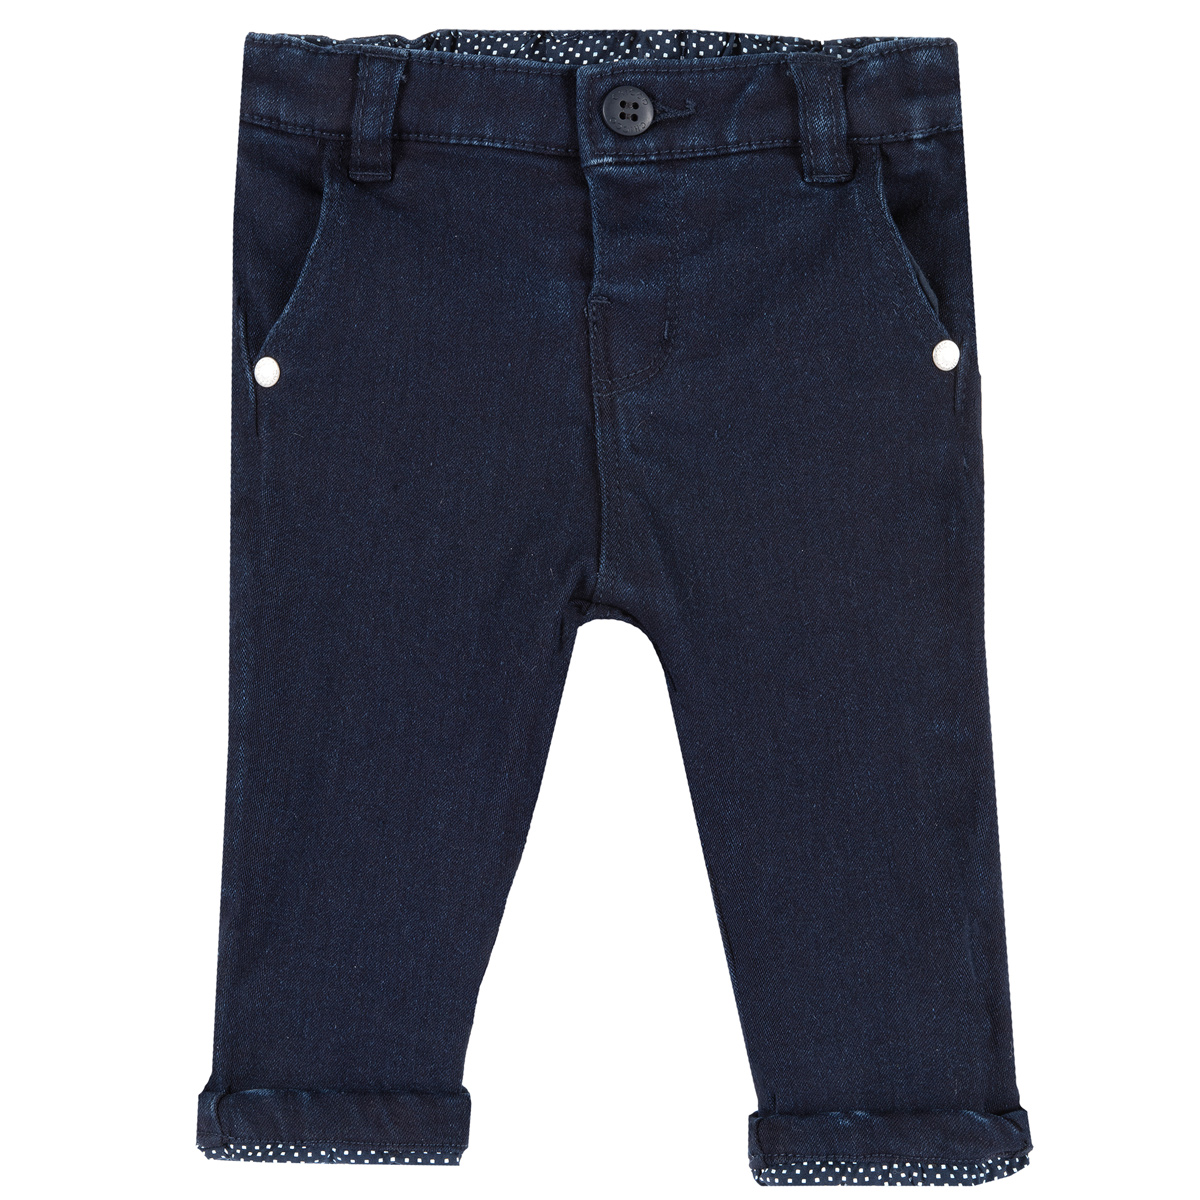 Pantalon lung copii Chicco, twill elastic, albastru, 94785 Pantaloni copii